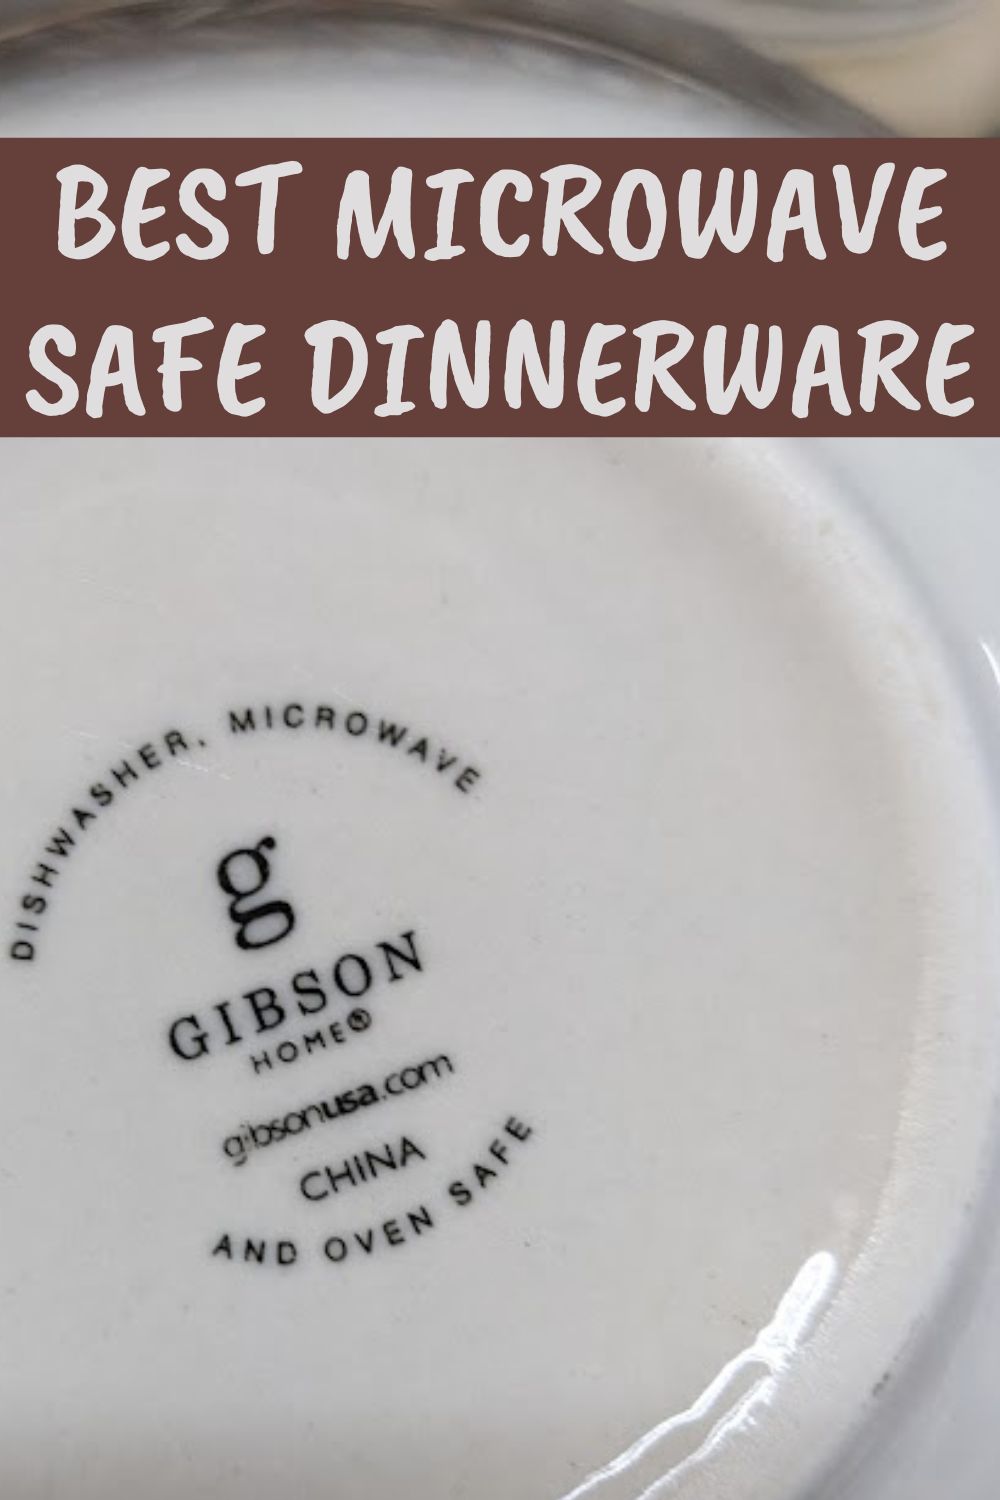 Best microwave safe dinnerware.